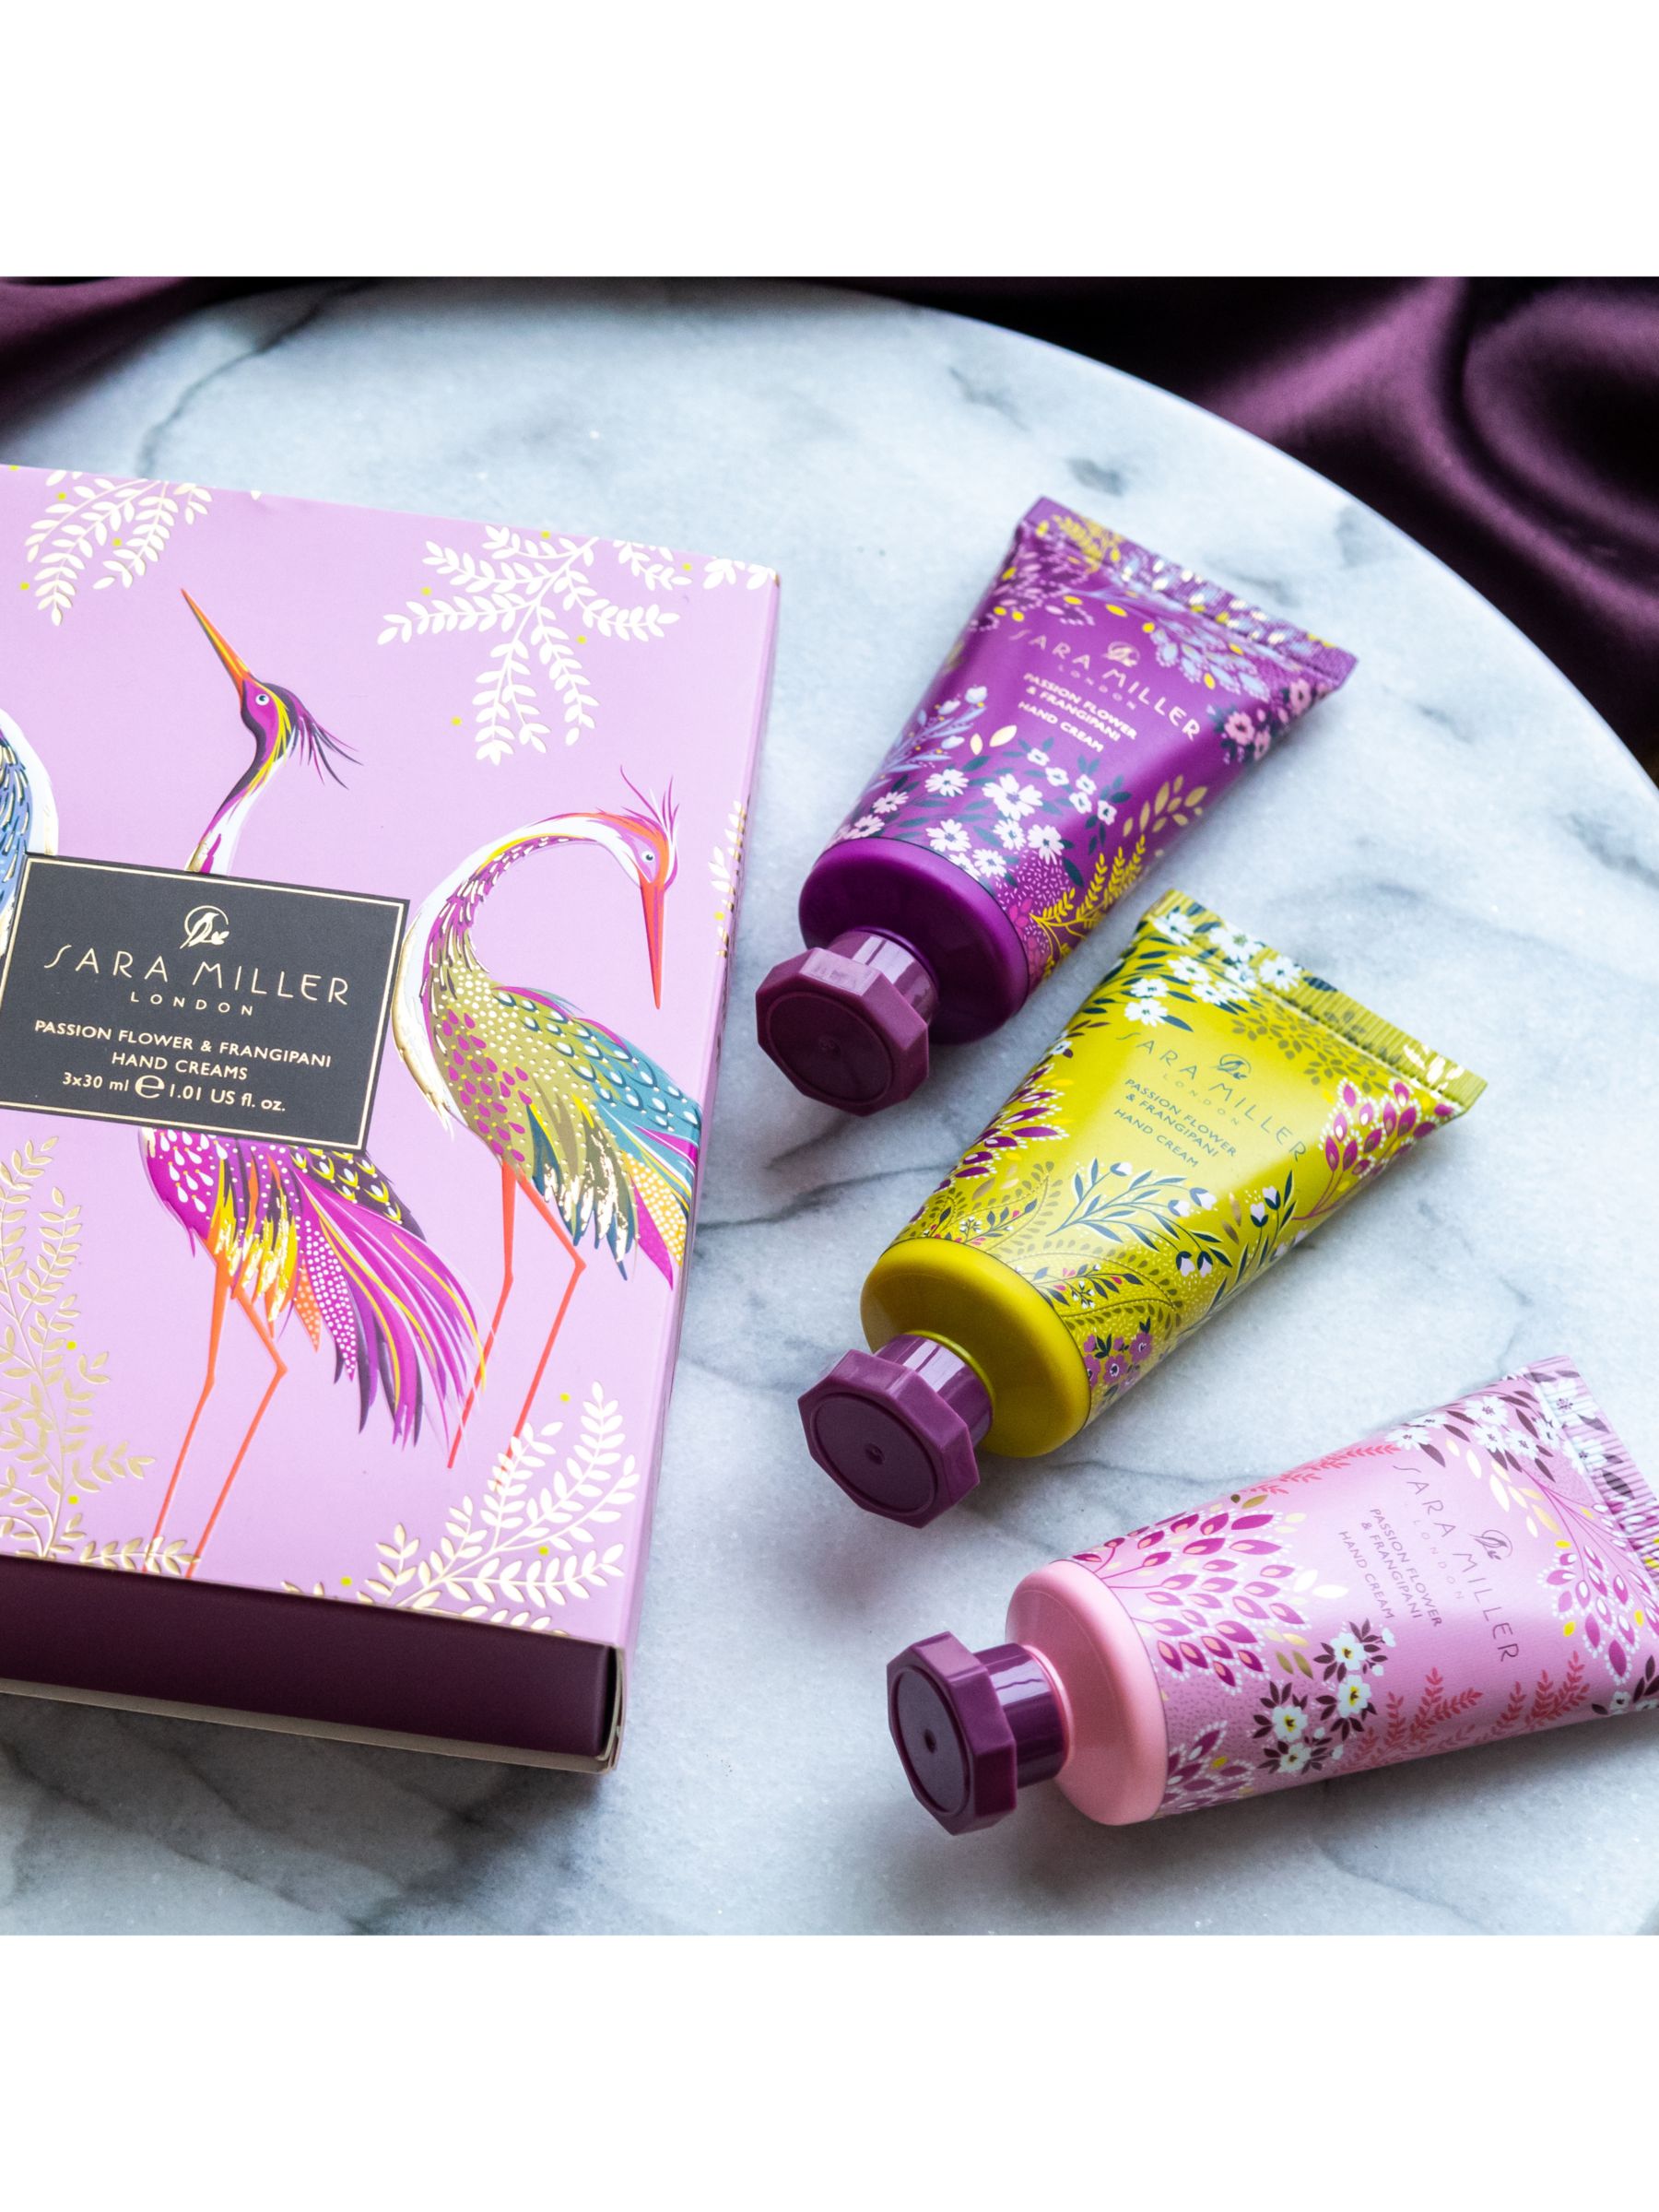 Sara Miller Passion Flower & Frangipani Hand Cream Gift Set 4